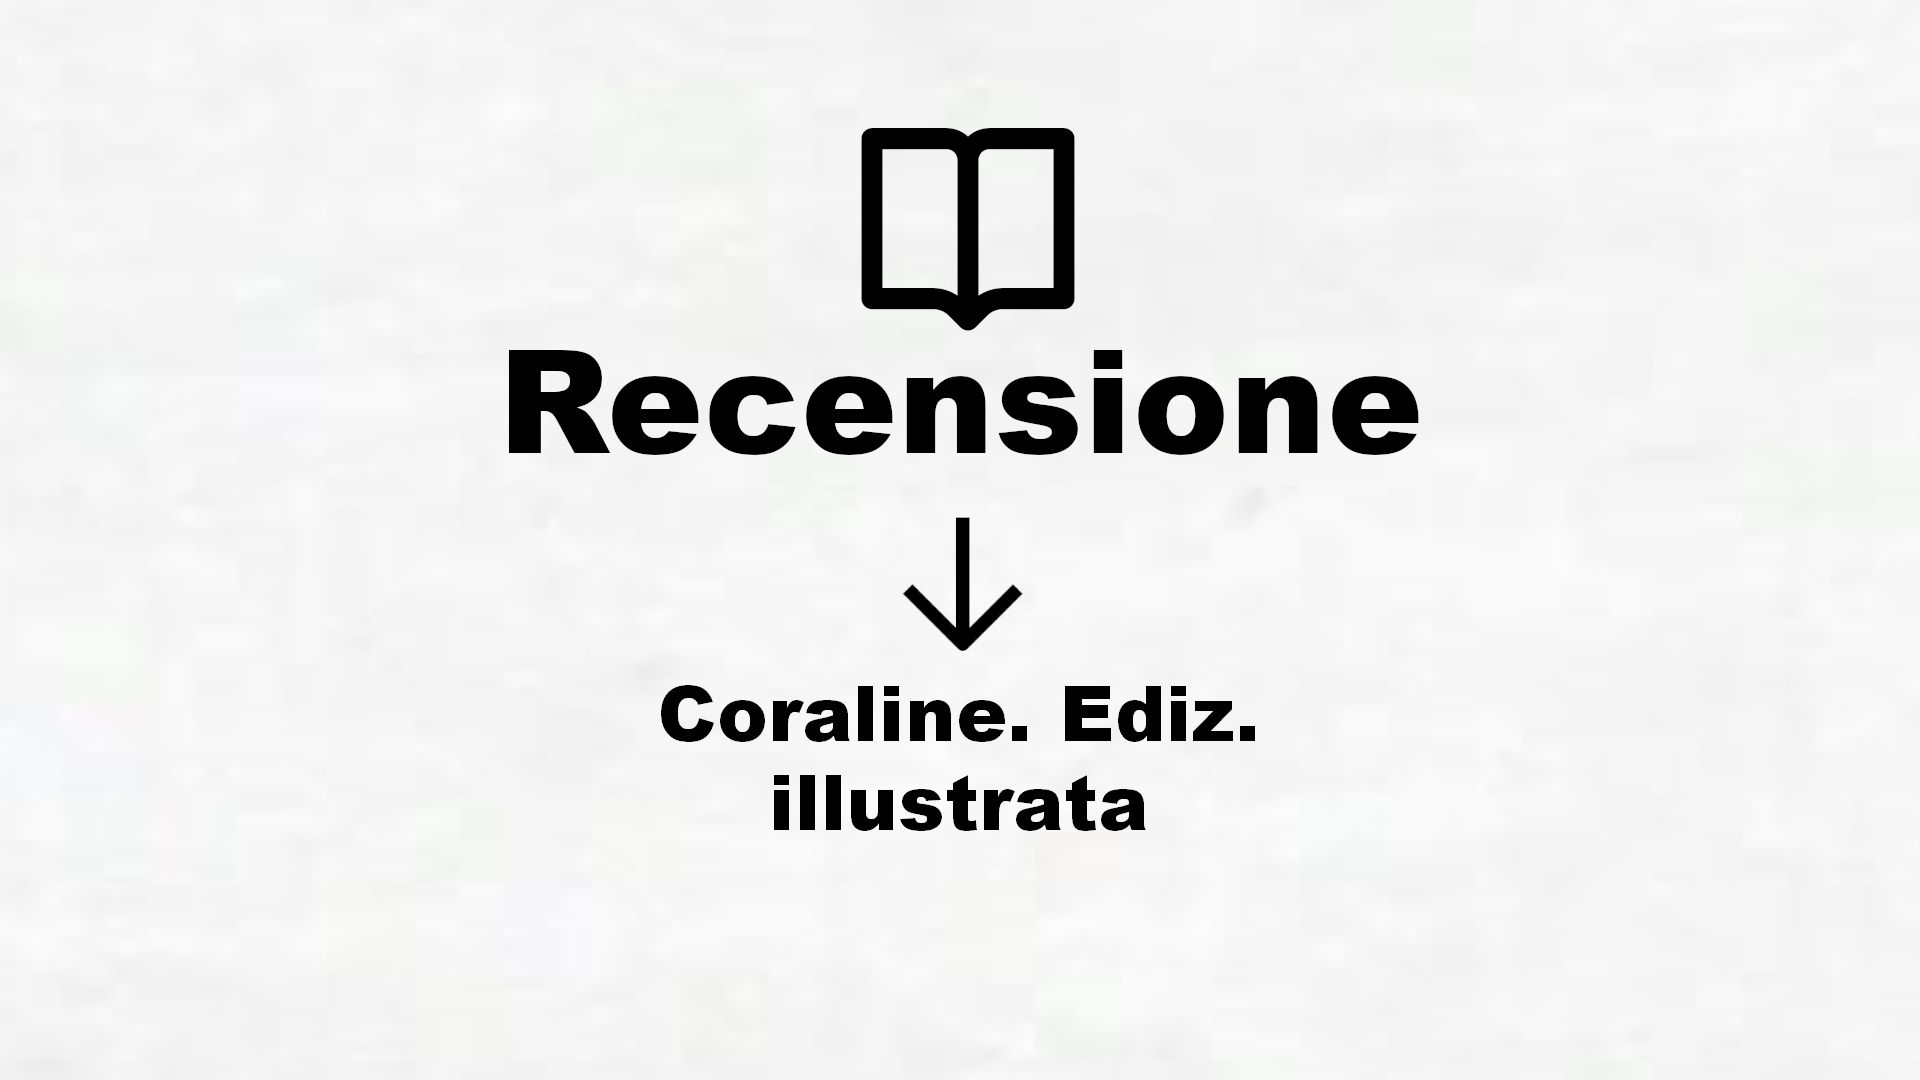 Coraline. Ediz. illustrata – Recensione Libro